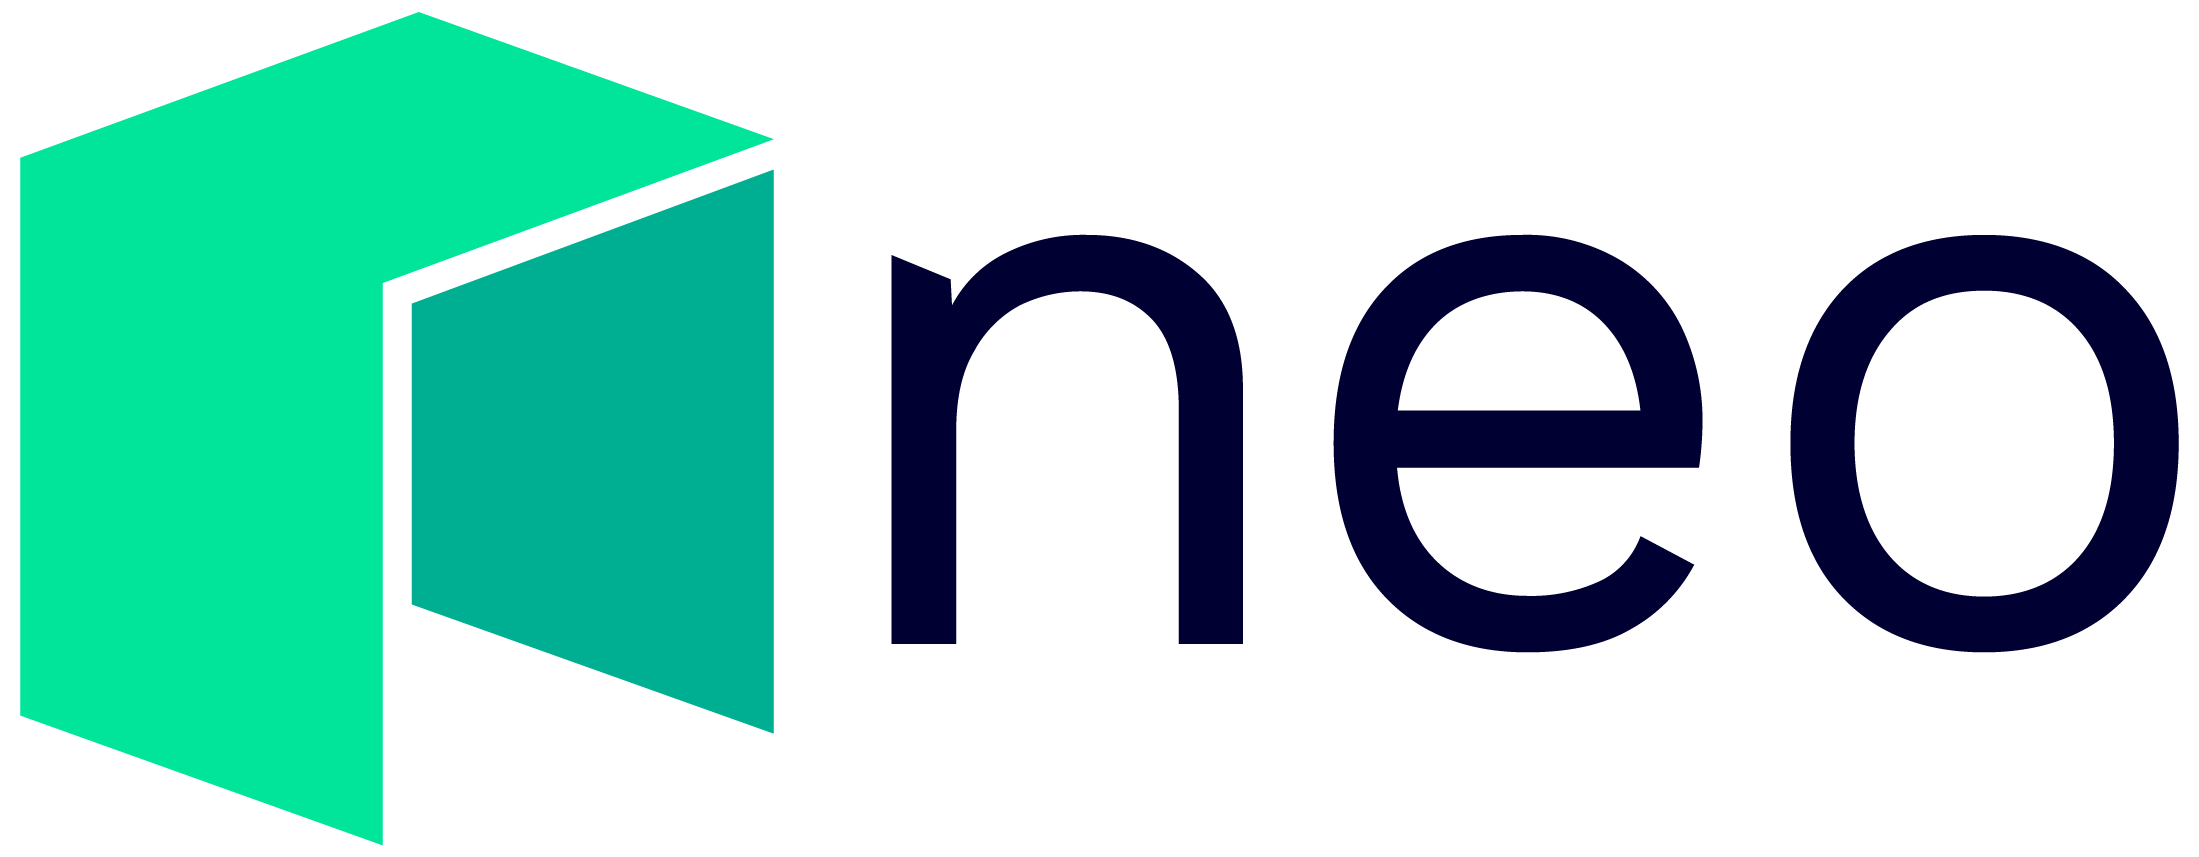 Neo logo colors